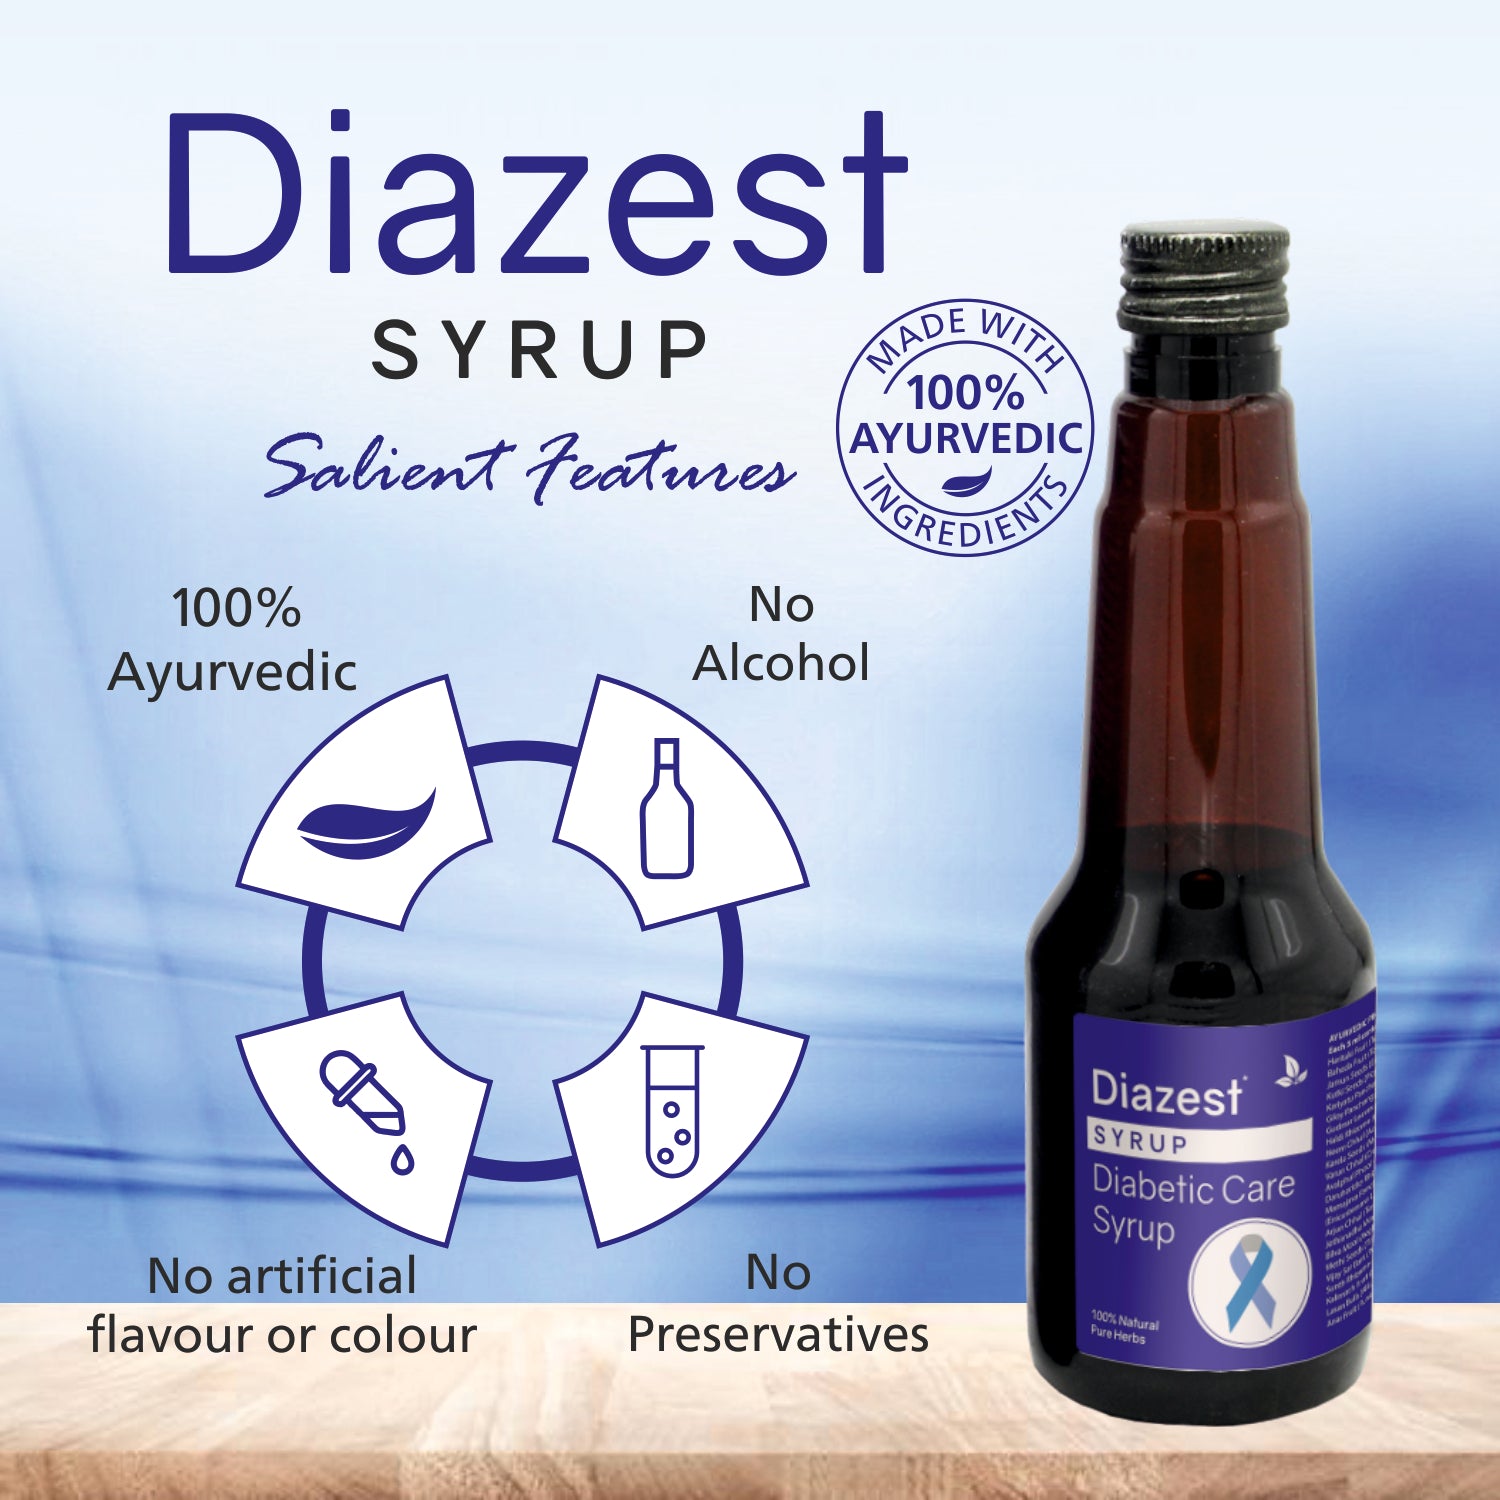 Diazest Syrup (200 ml)